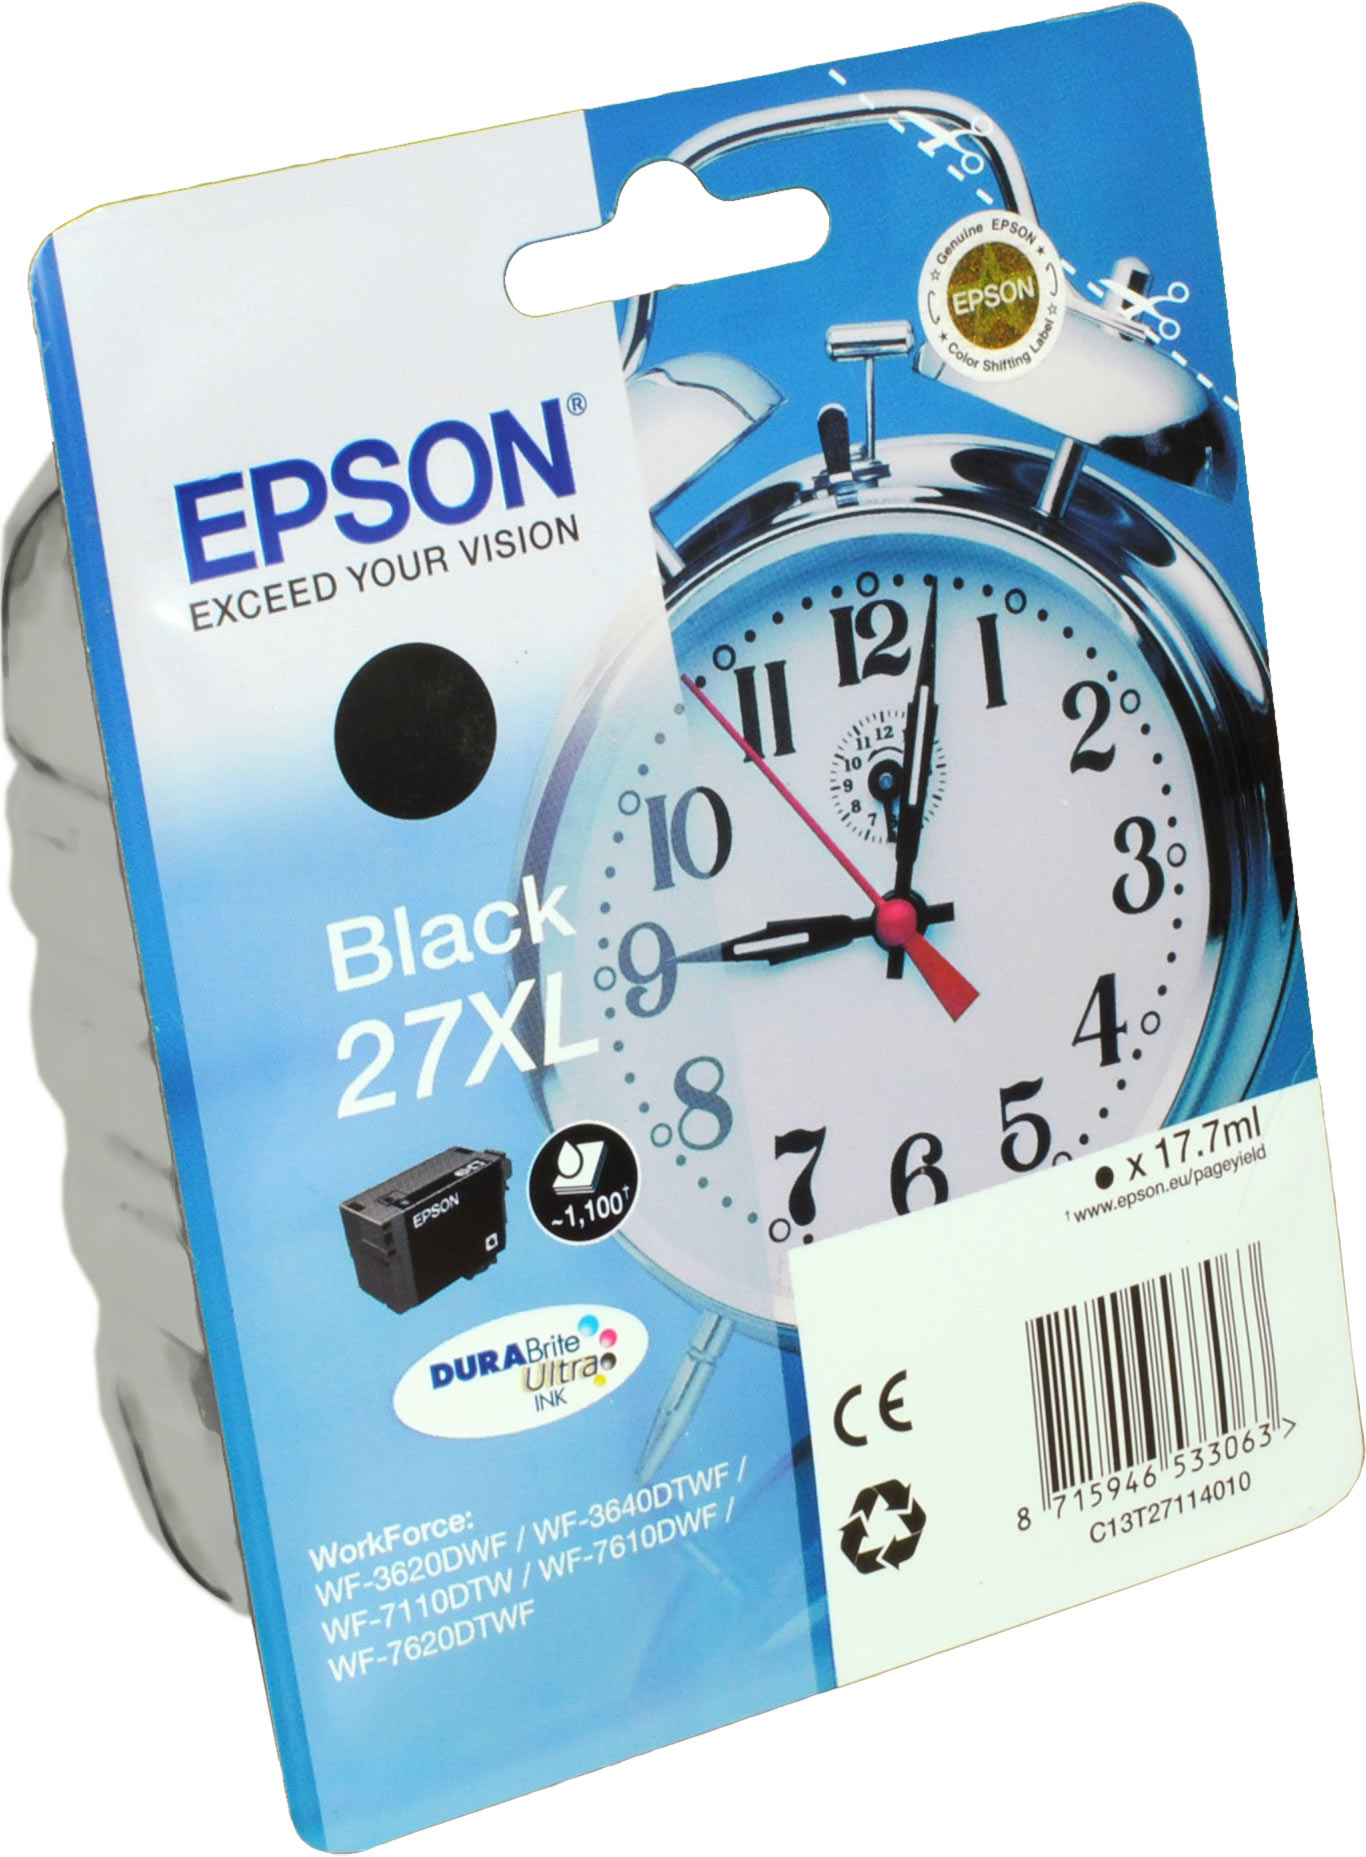 Epson Tinte C13T27114012  Black  27XL  schwarz